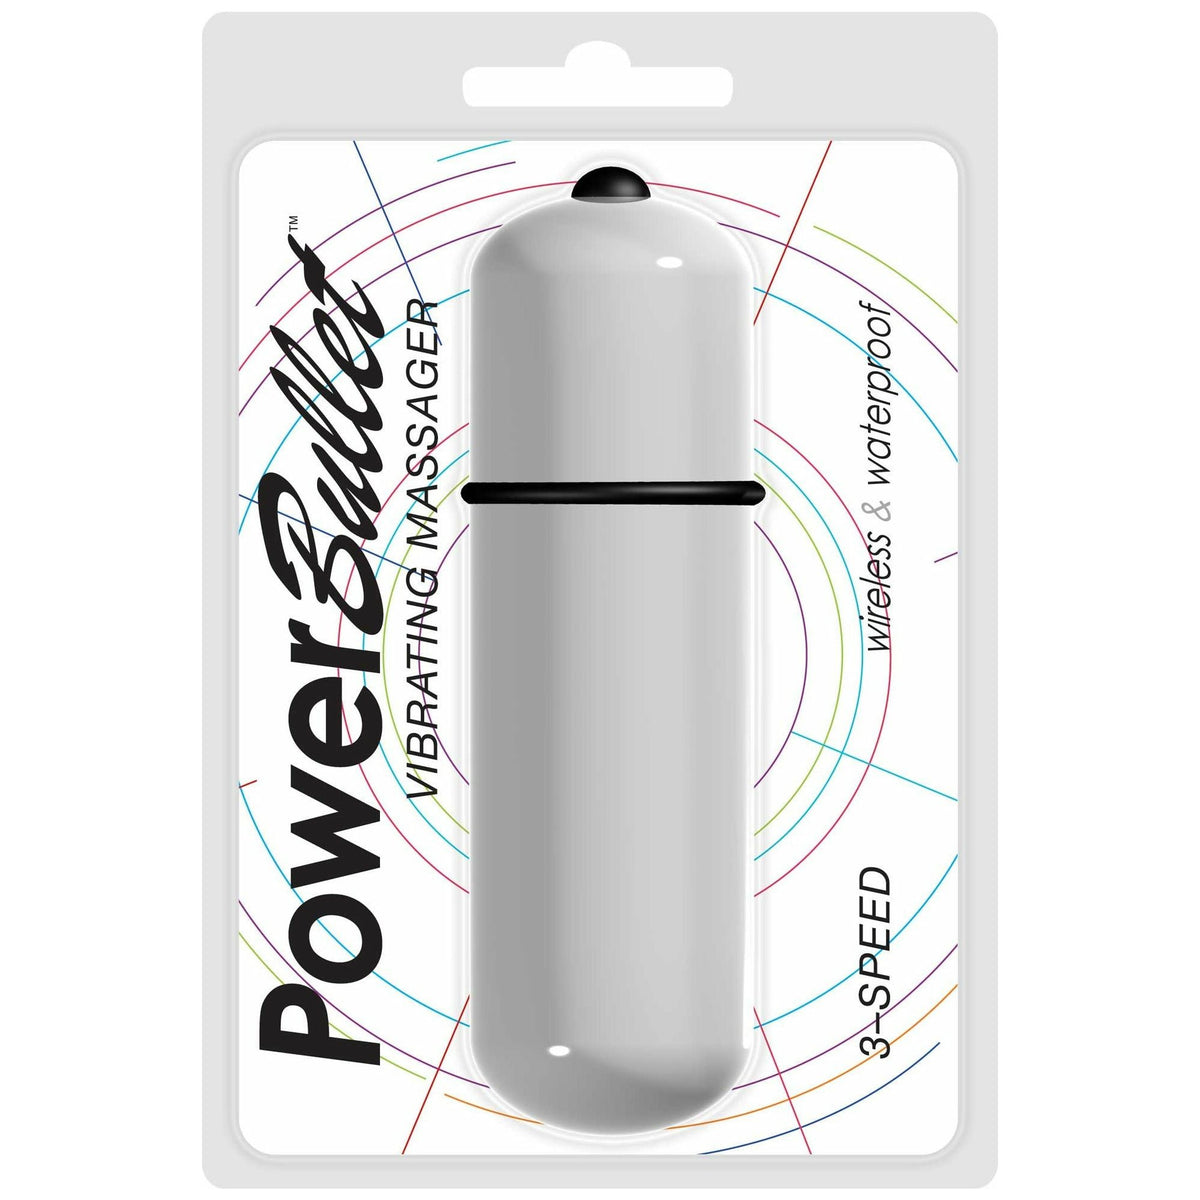 Power Bullet- 3-Speed 6-Inch Bullet Vibrator - Battery Operated- White